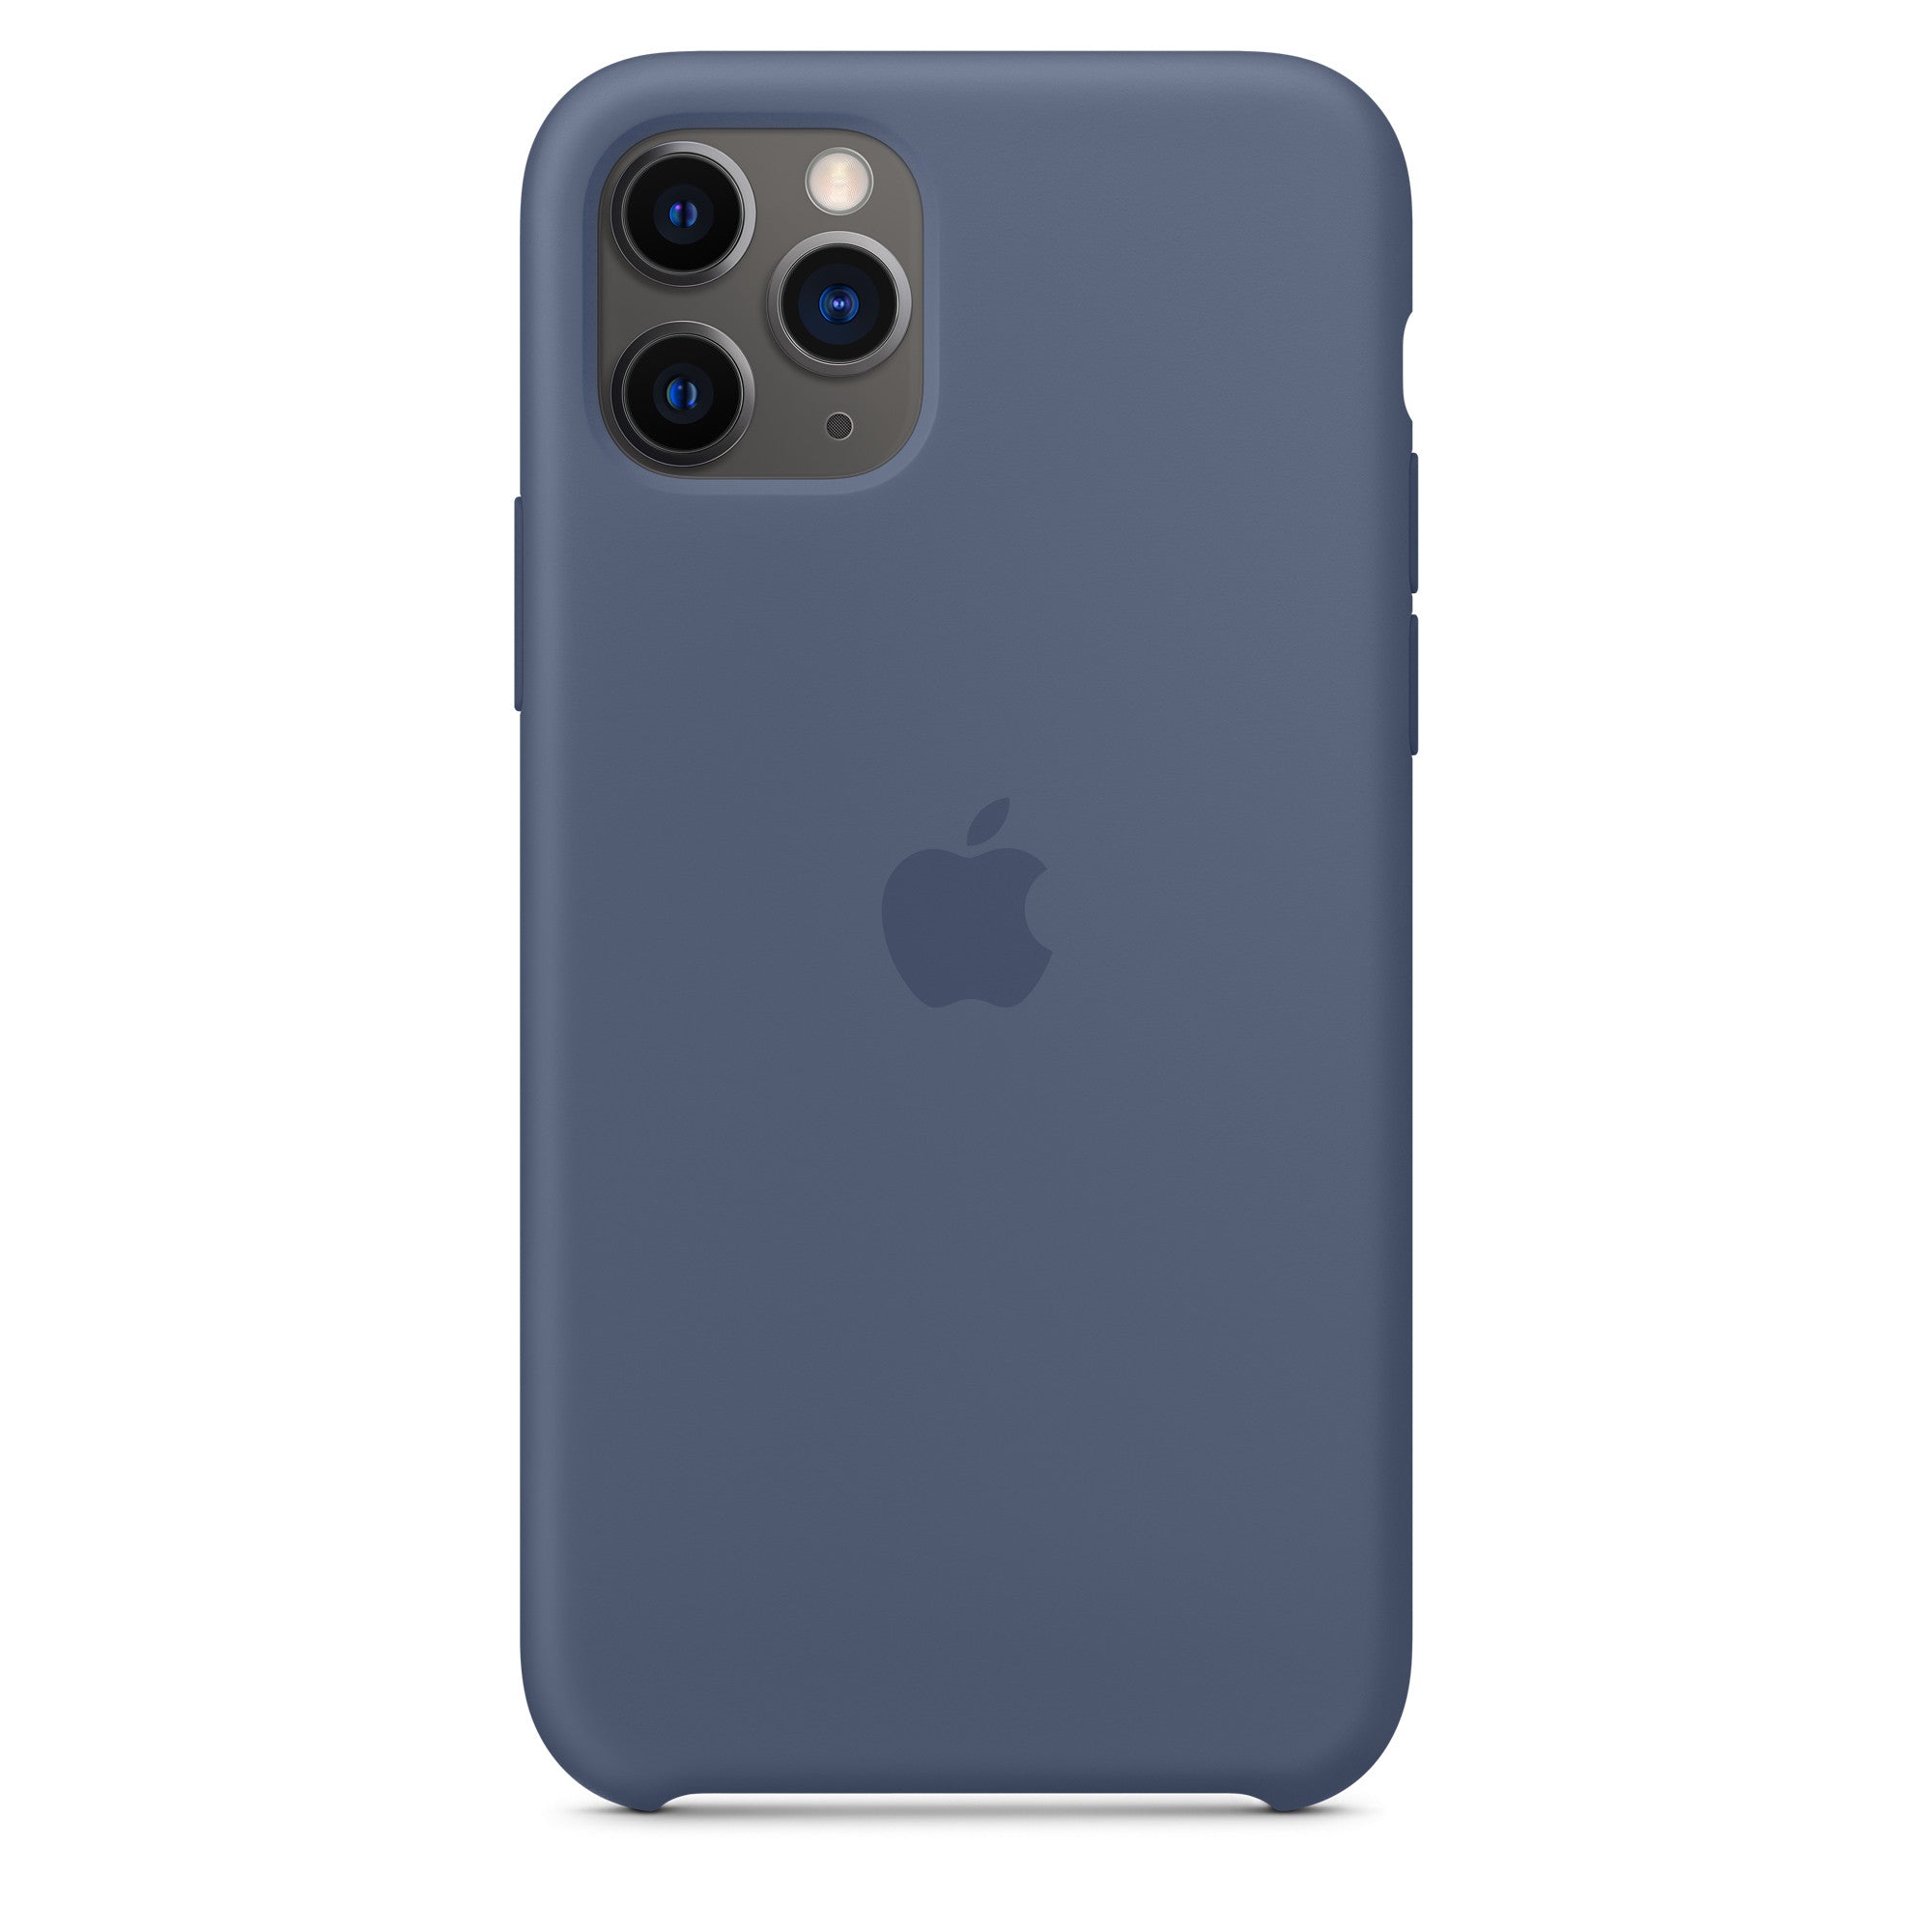 Apple iPhone 11 Pro Silicone Case - Alaskan Blue  - Brand New